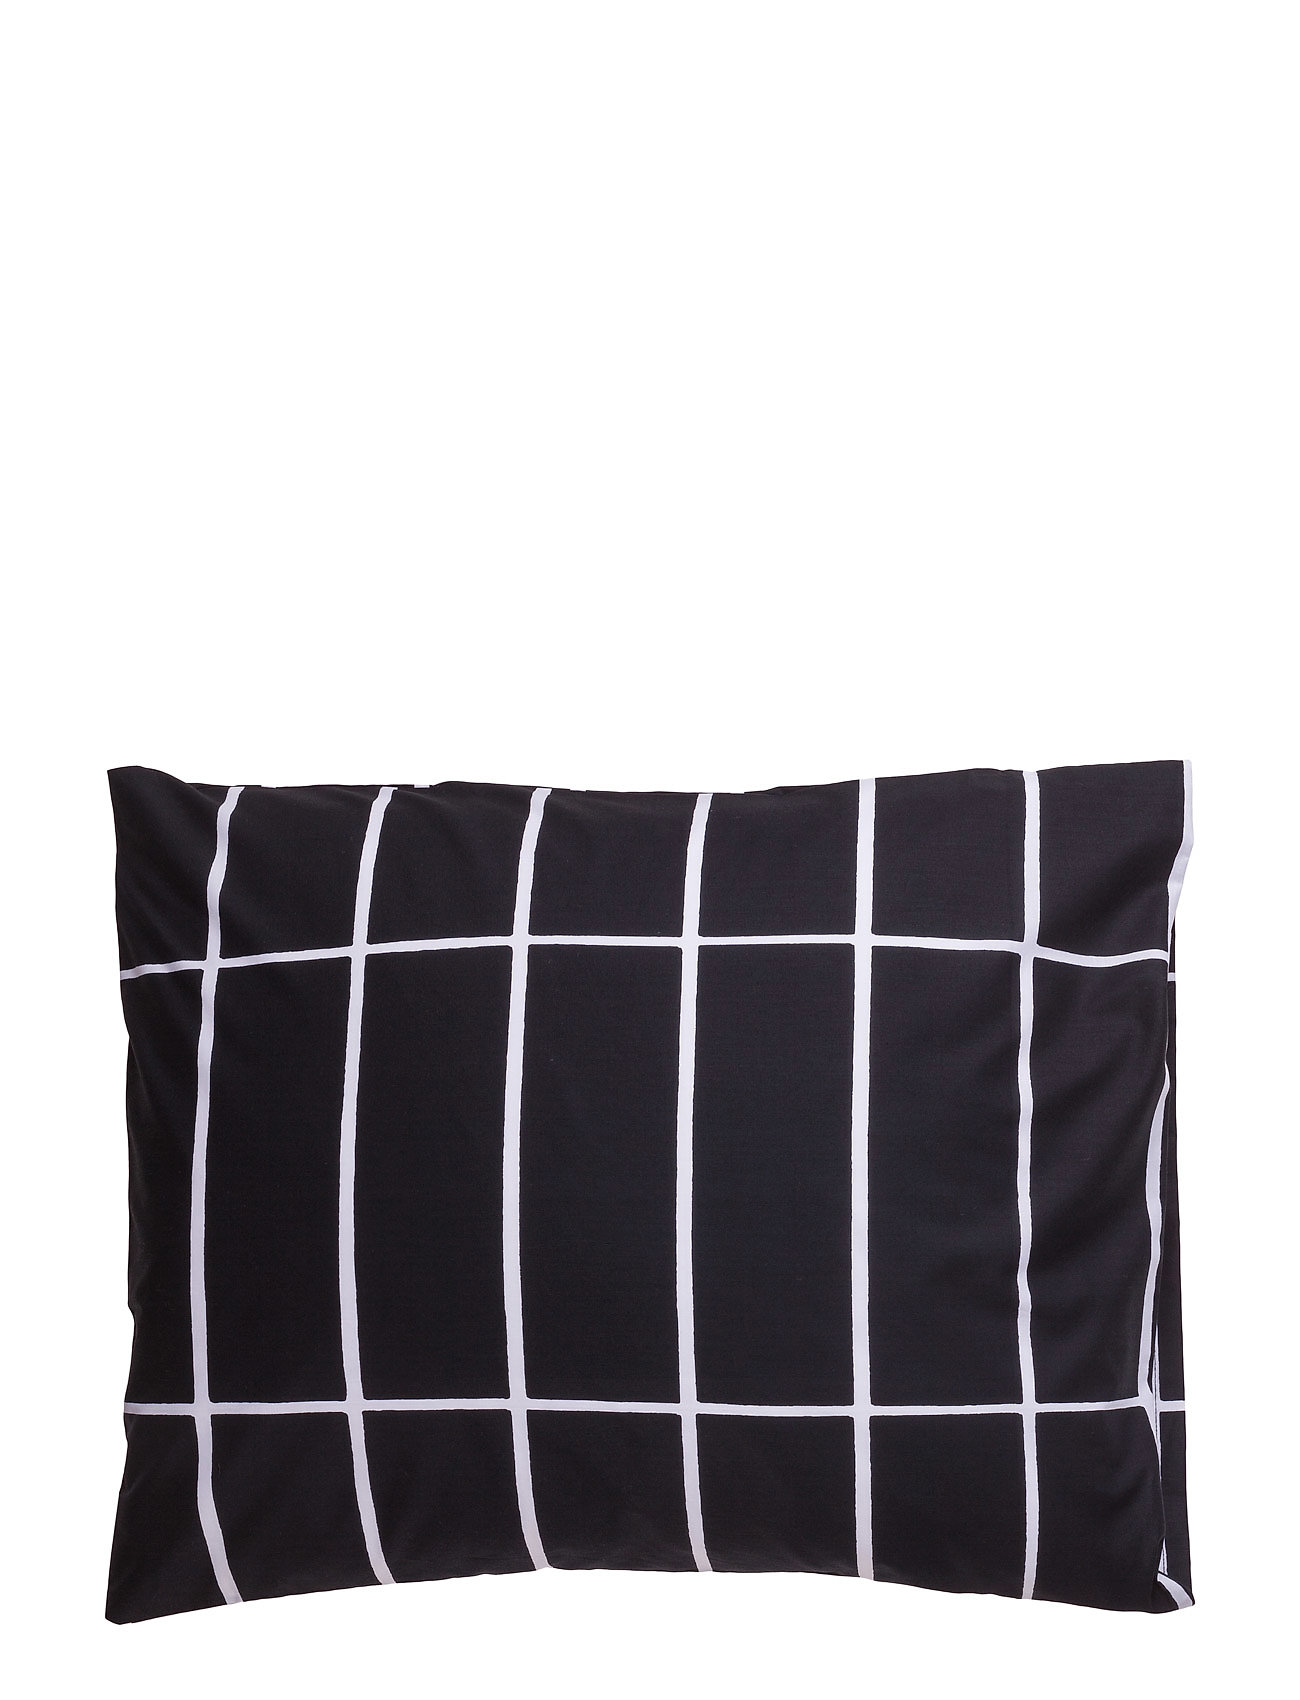 Tiiliskivi Pillow Case Home Textiles Bedtextiles Pillow Cases Black Marimekko Home